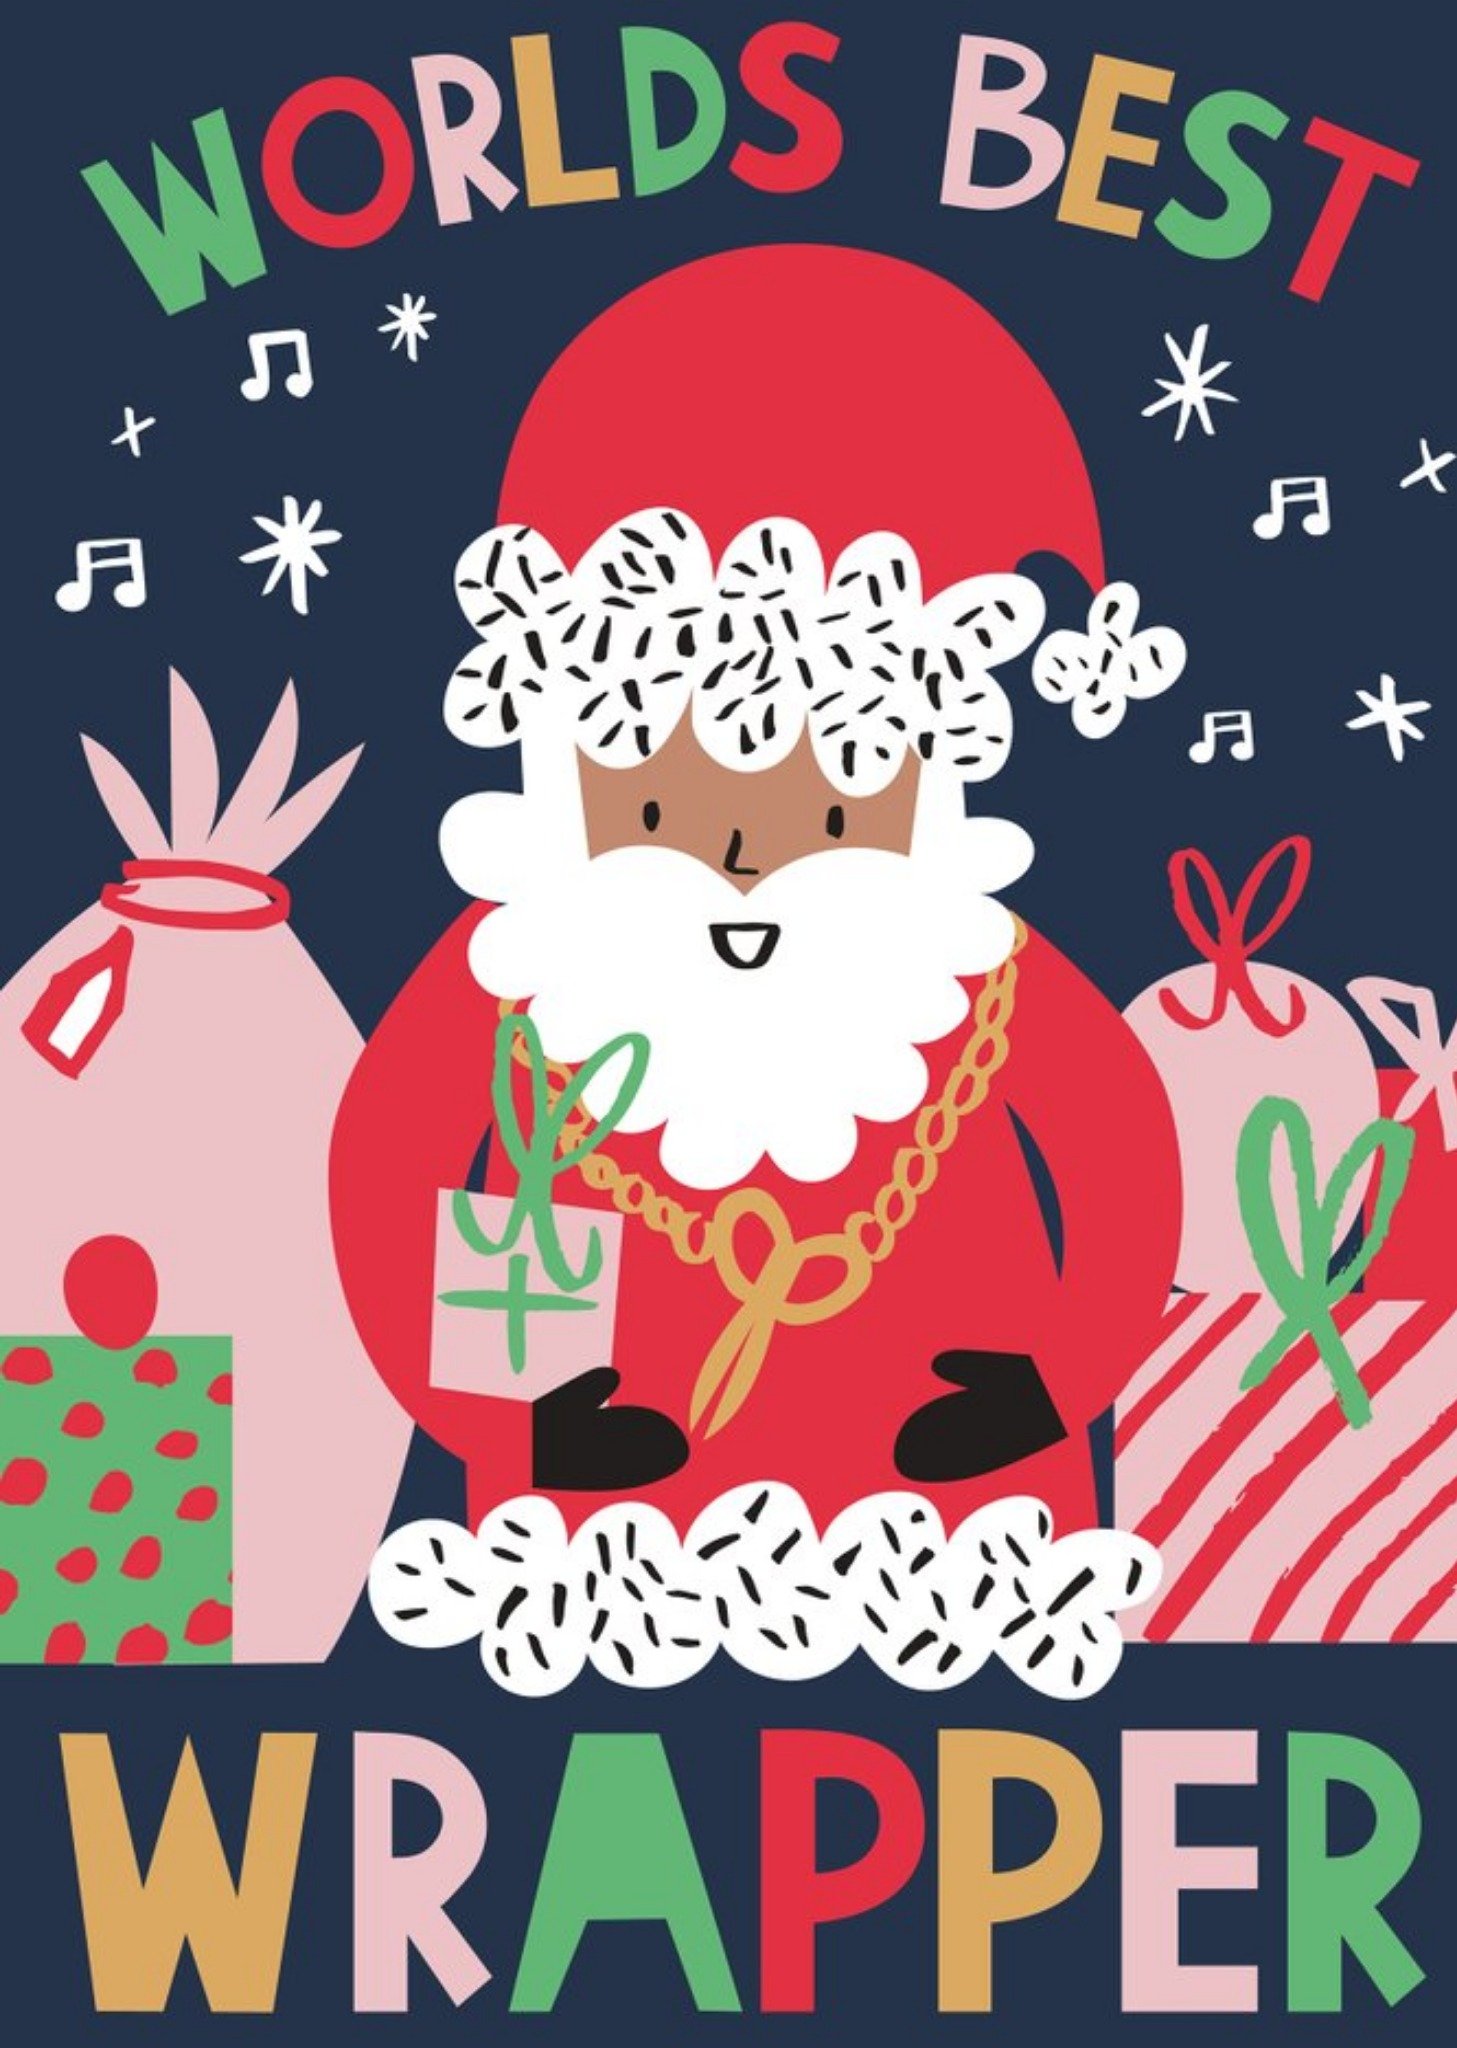 Rumble Cards Worlds Best Wrapper Hip Santa Illustration Pun Christmas Card Ecard